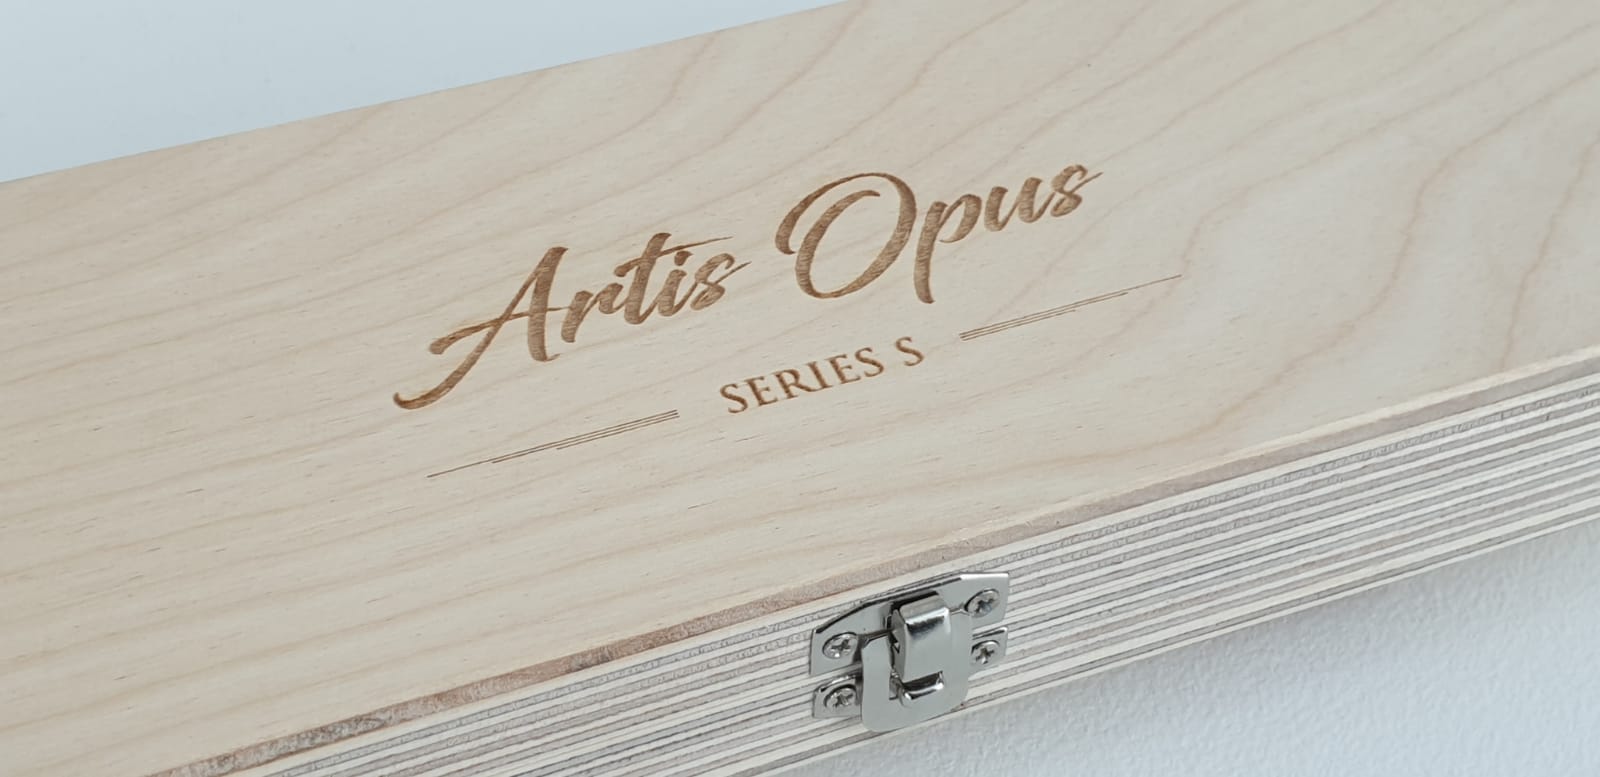 Artis Opus - S Series Brush #0 - Heretic Games